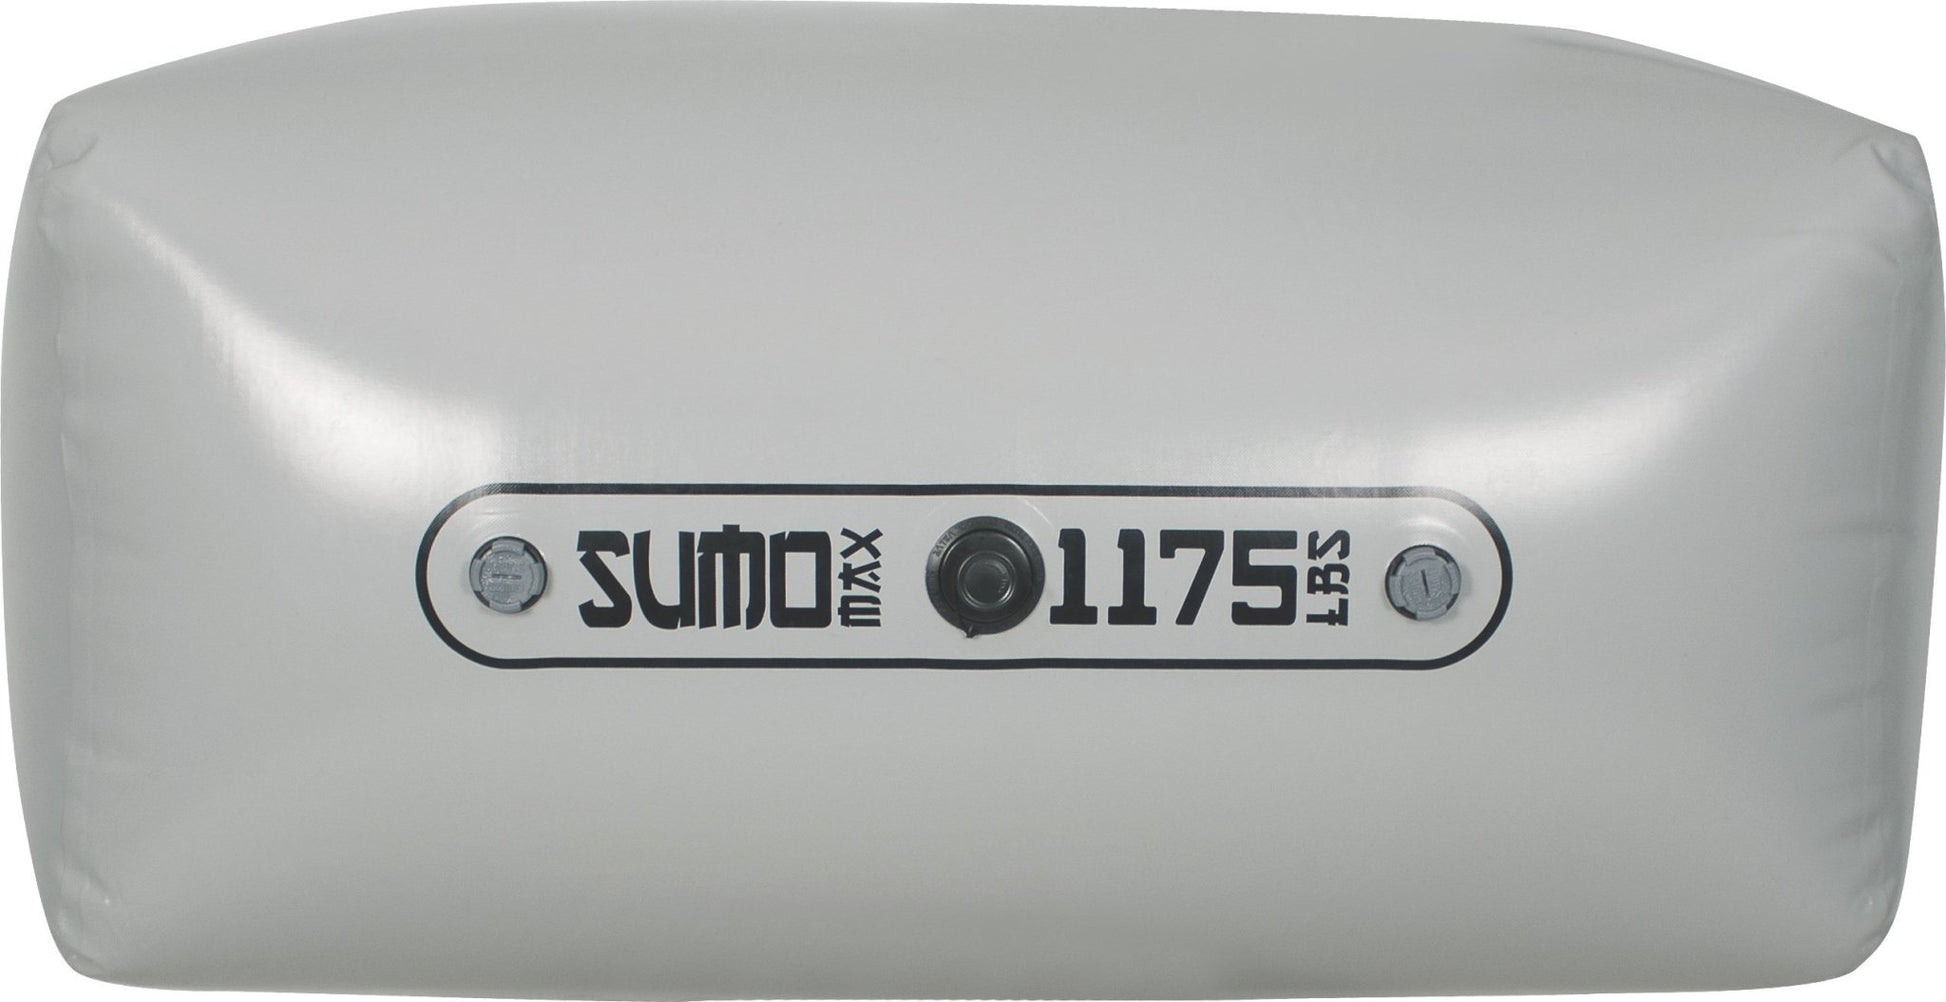 Sumo Max Square -Sumo2179008-Grey-1175